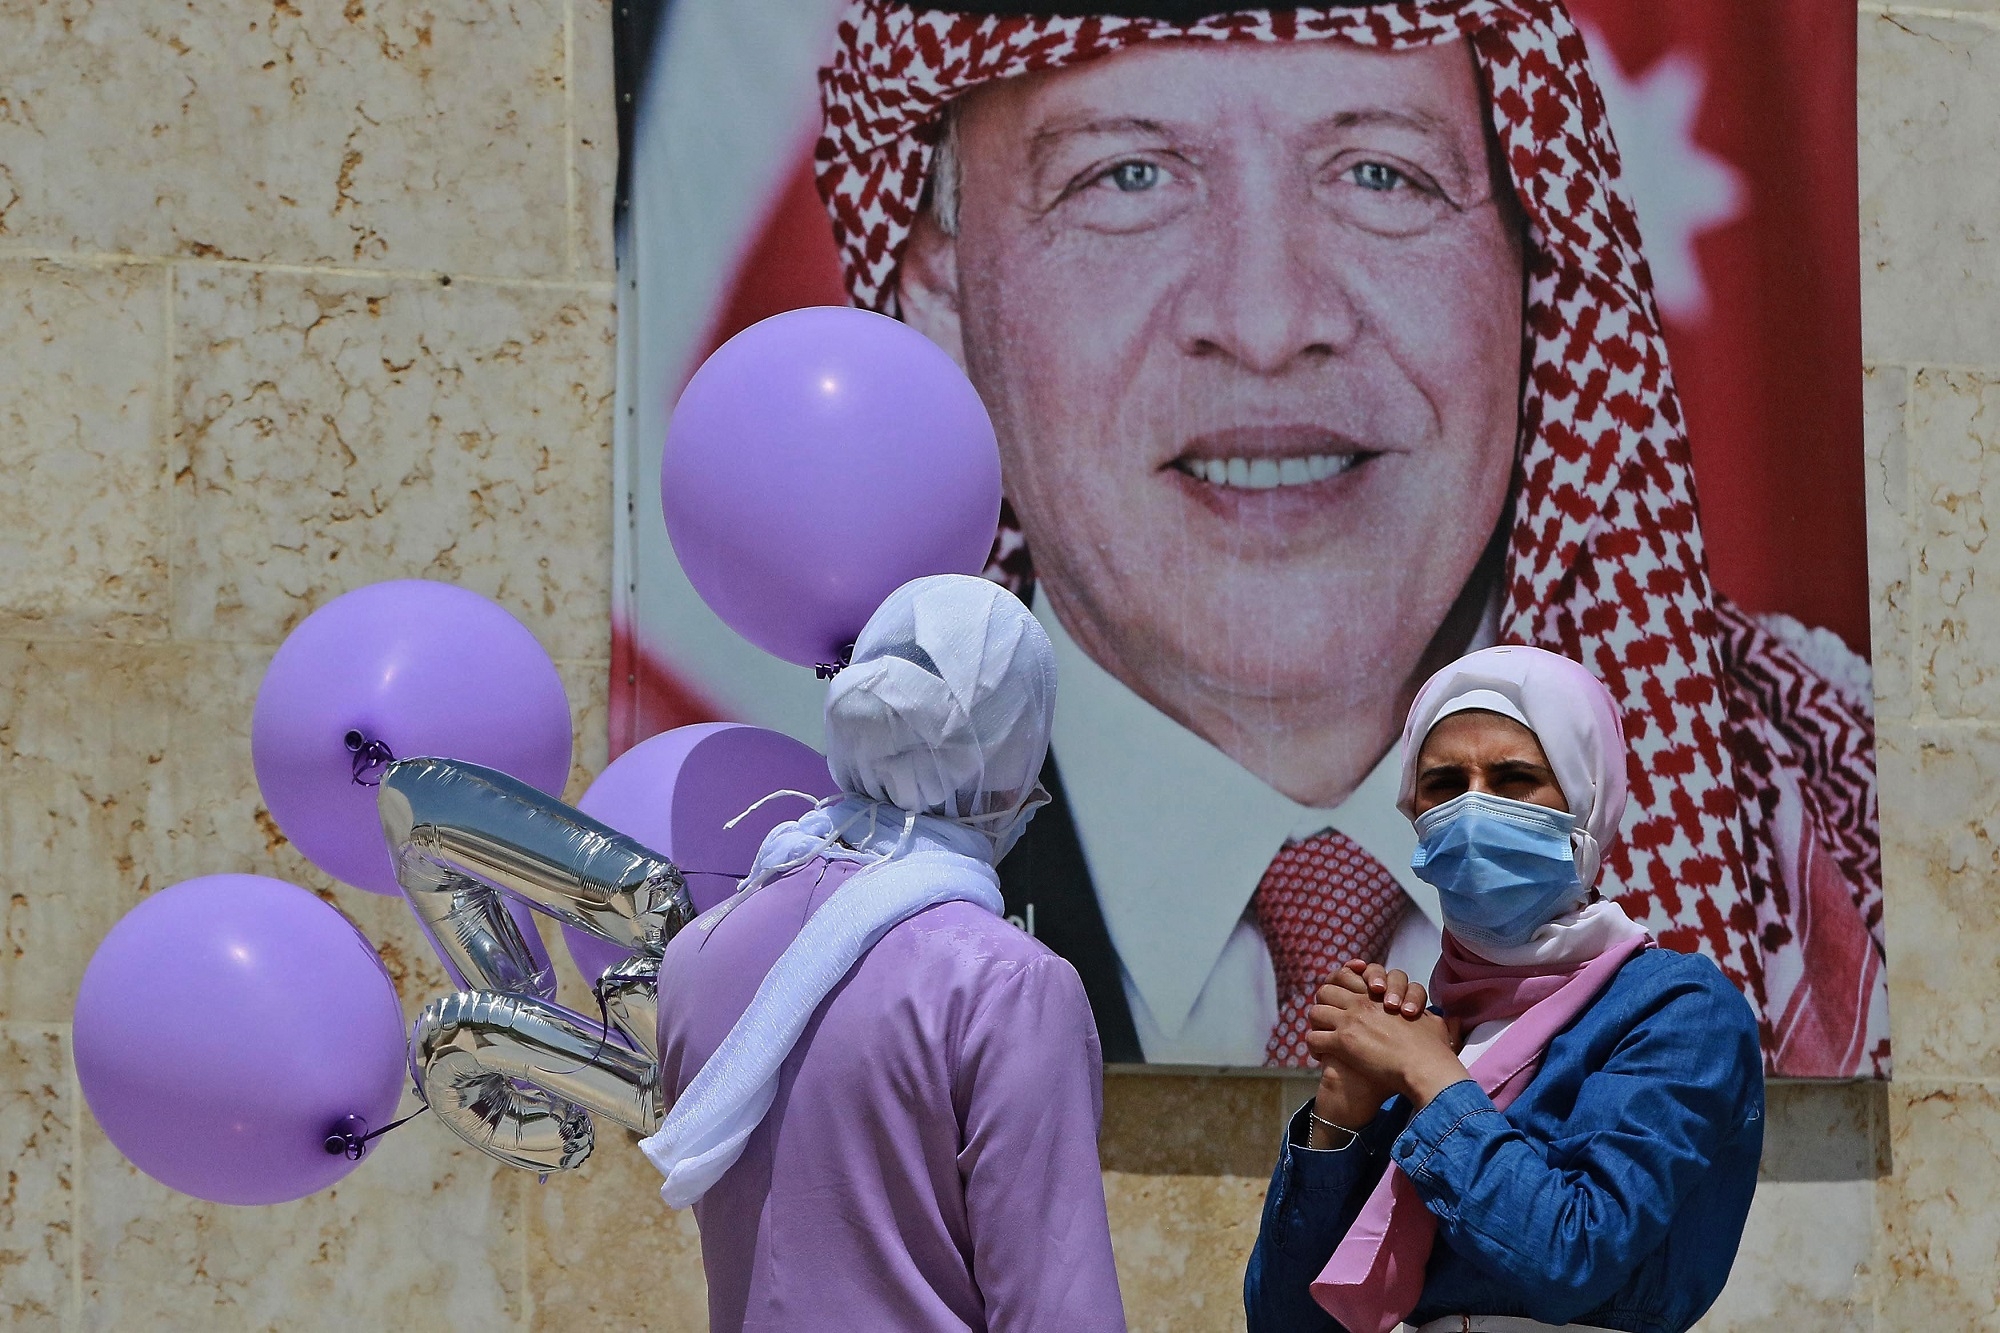 Women carrying balloons stand next to a poster of Jordan's King Abdullah in Amman